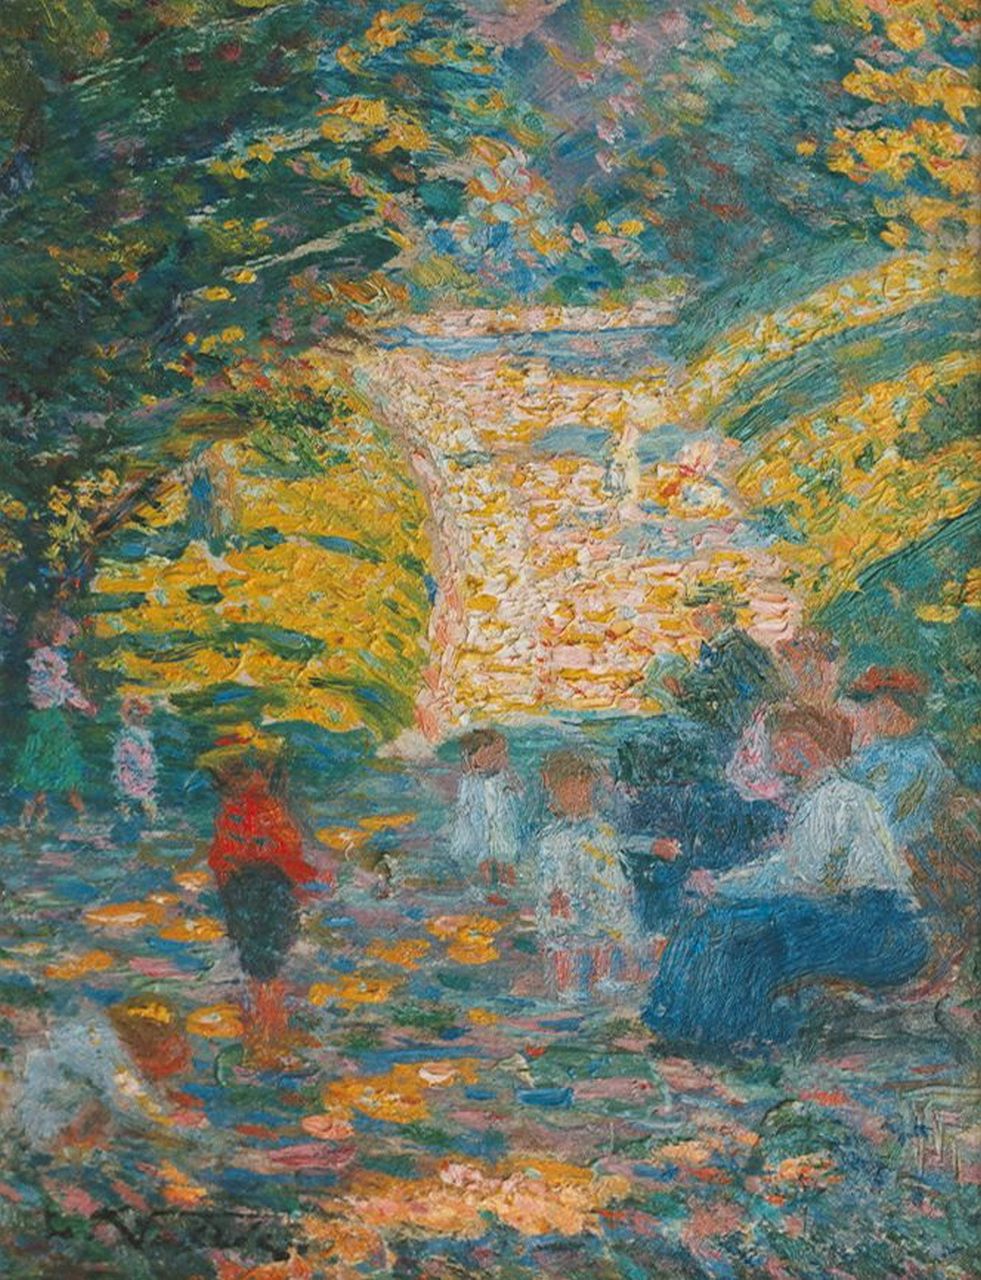 Vallée L.  | Ludovic Vallée, In het park, olieverf op paneel 15,5 x 12,0 cm, gesigneerd linksonder